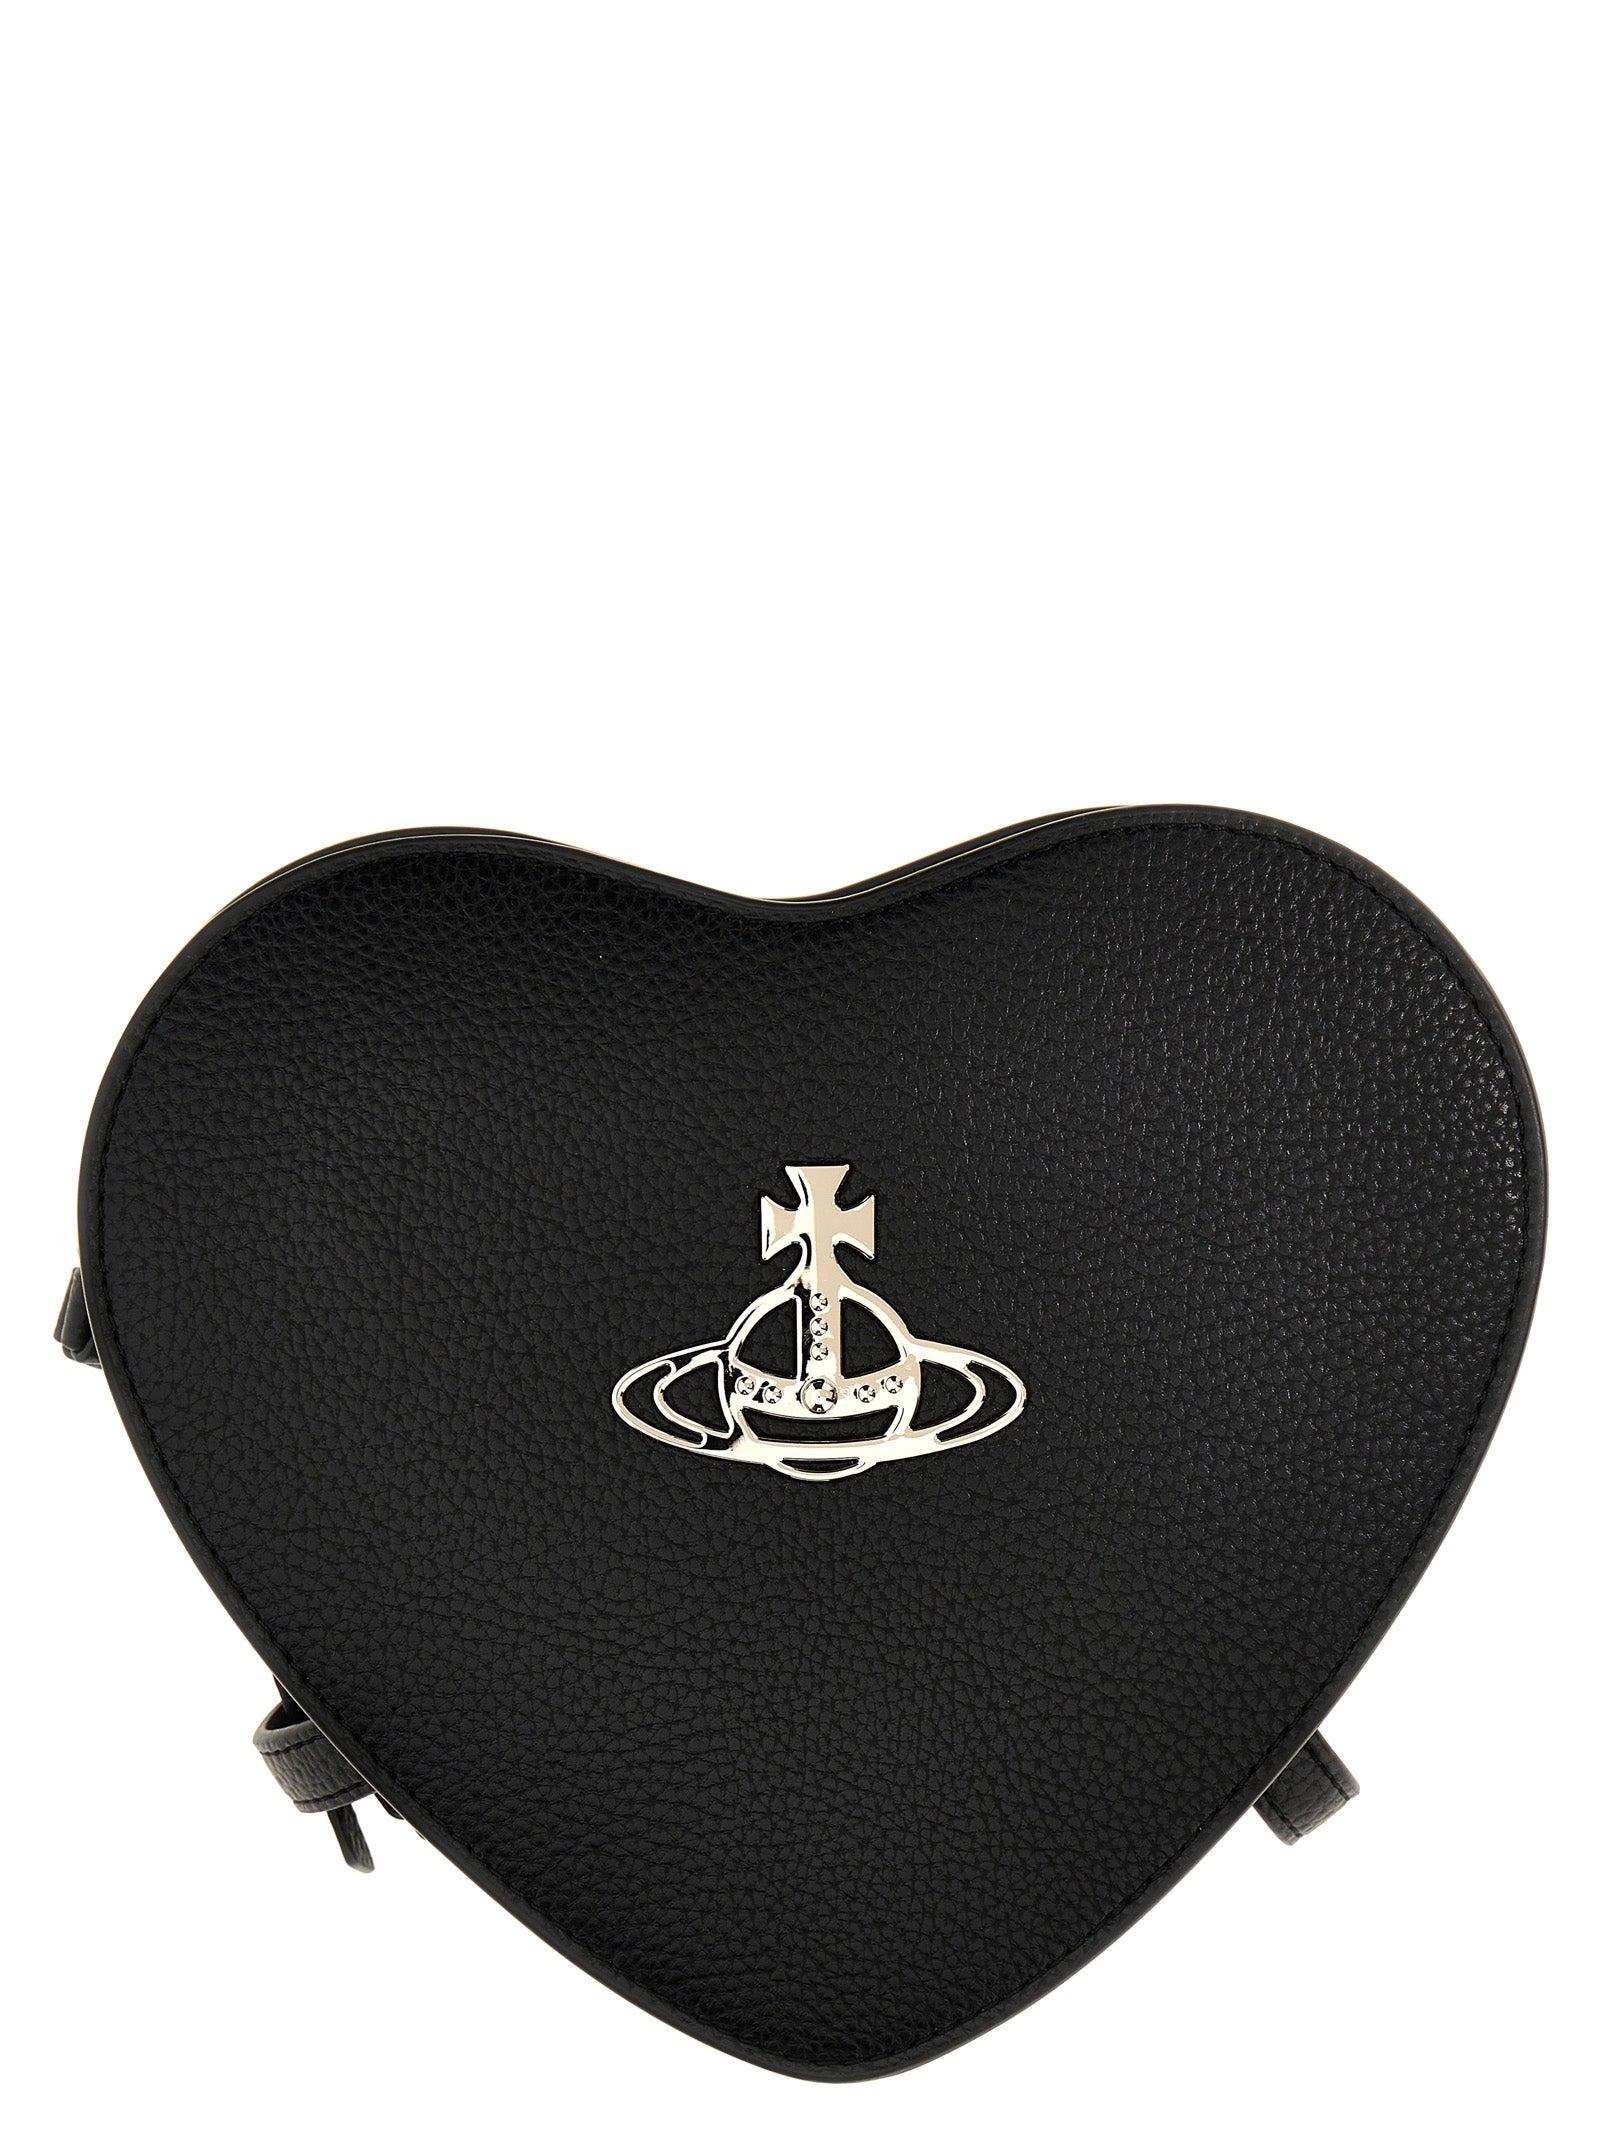 Vivienne Westwood Louise Heart Crossbody Bags in Black | Lyst